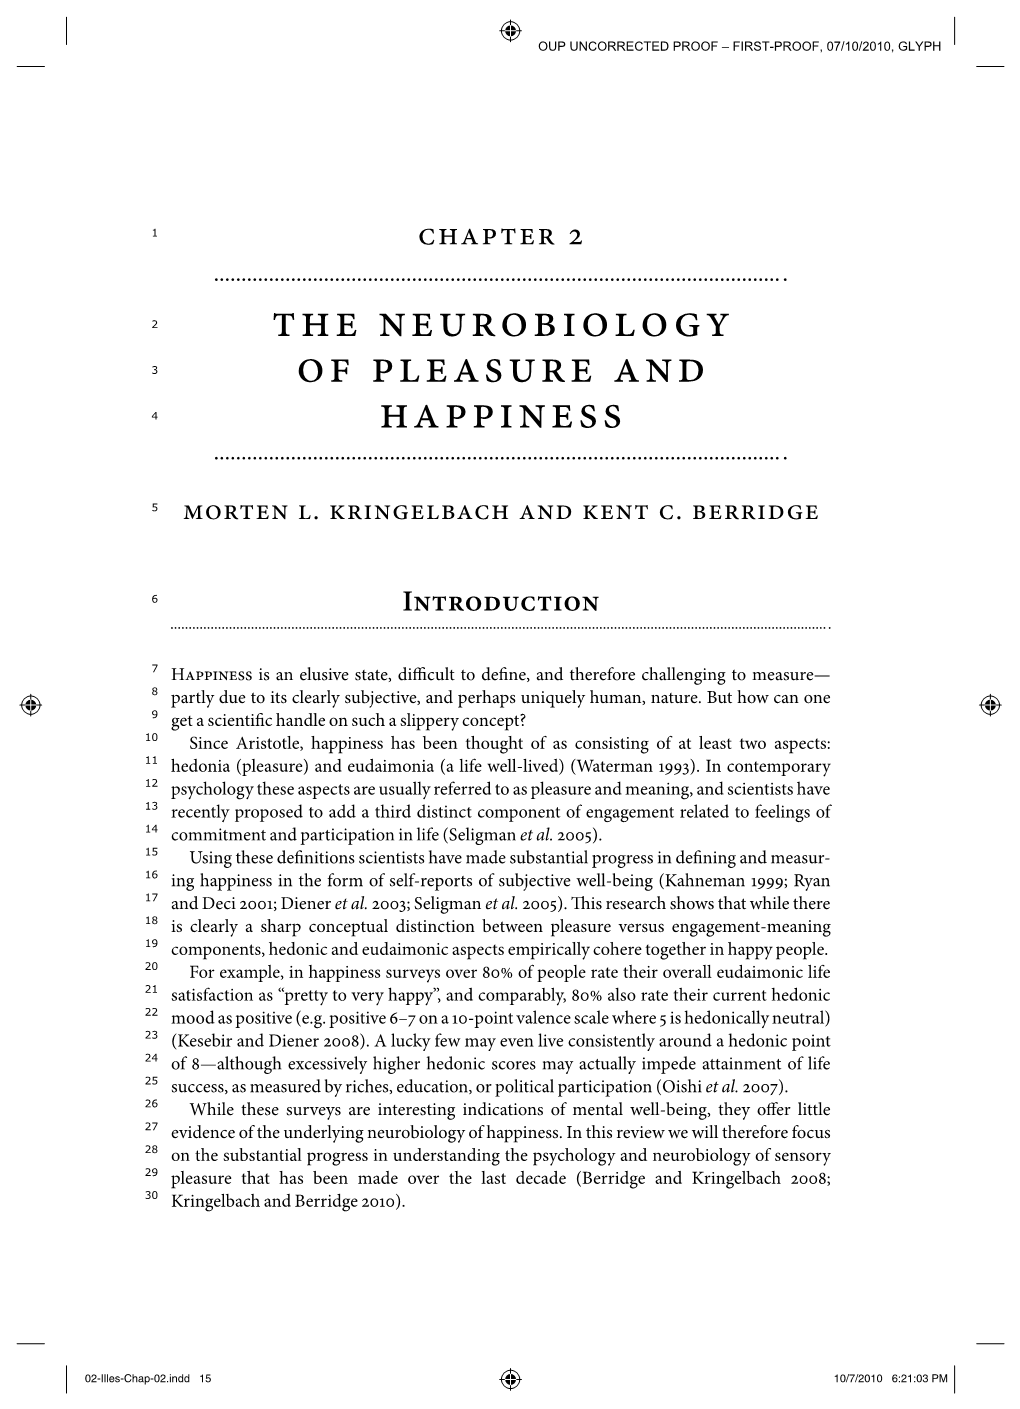 Kringelbach, M.L. & Berridge, K.C. the Neurobiology of Pleasure And